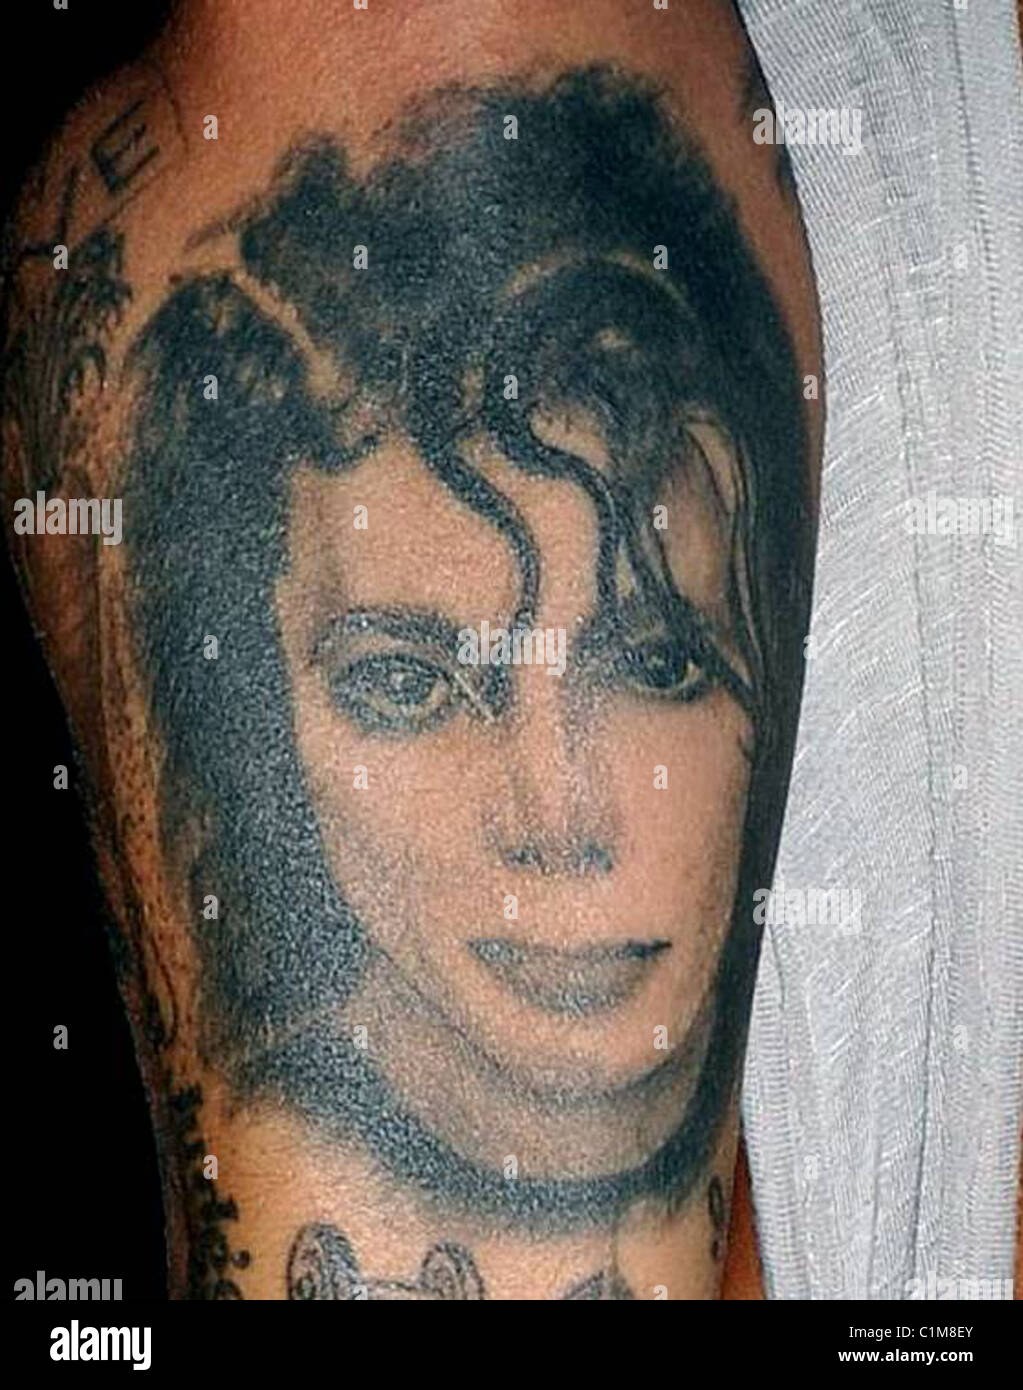 Jodie Marsh shows her Michael Jackson tattoo at Mansion Nightclub, Dublin, Ireland - 27.06.09 Stock Photo